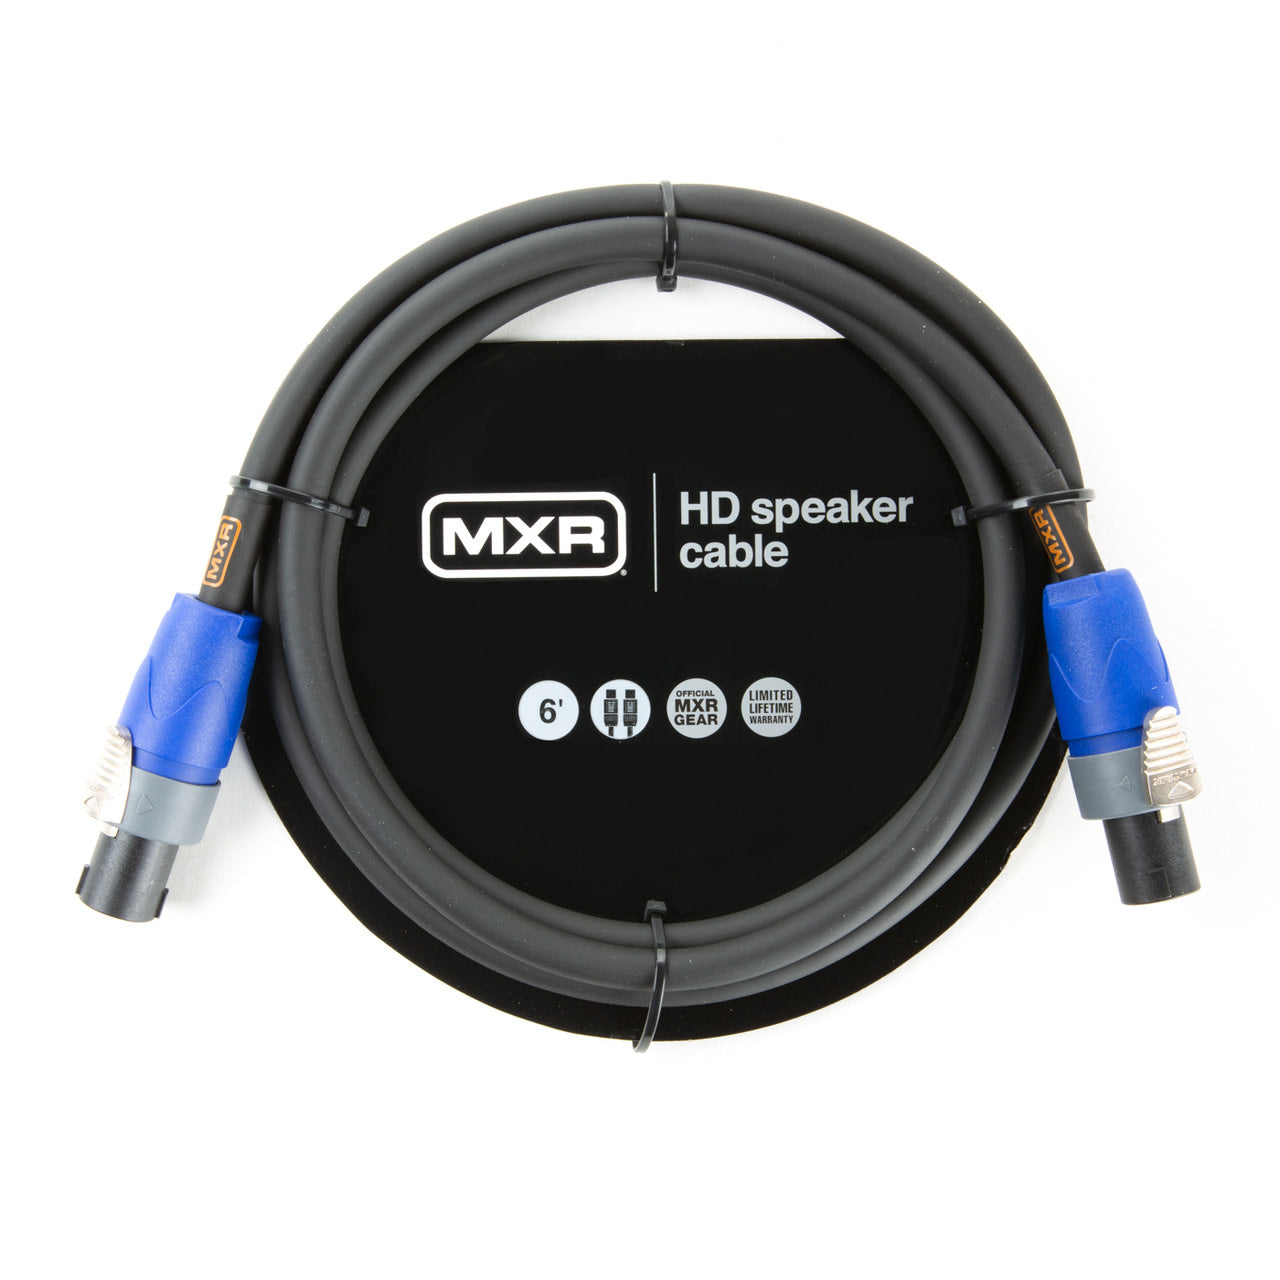 MXR 6 FT HD Speakon Cable